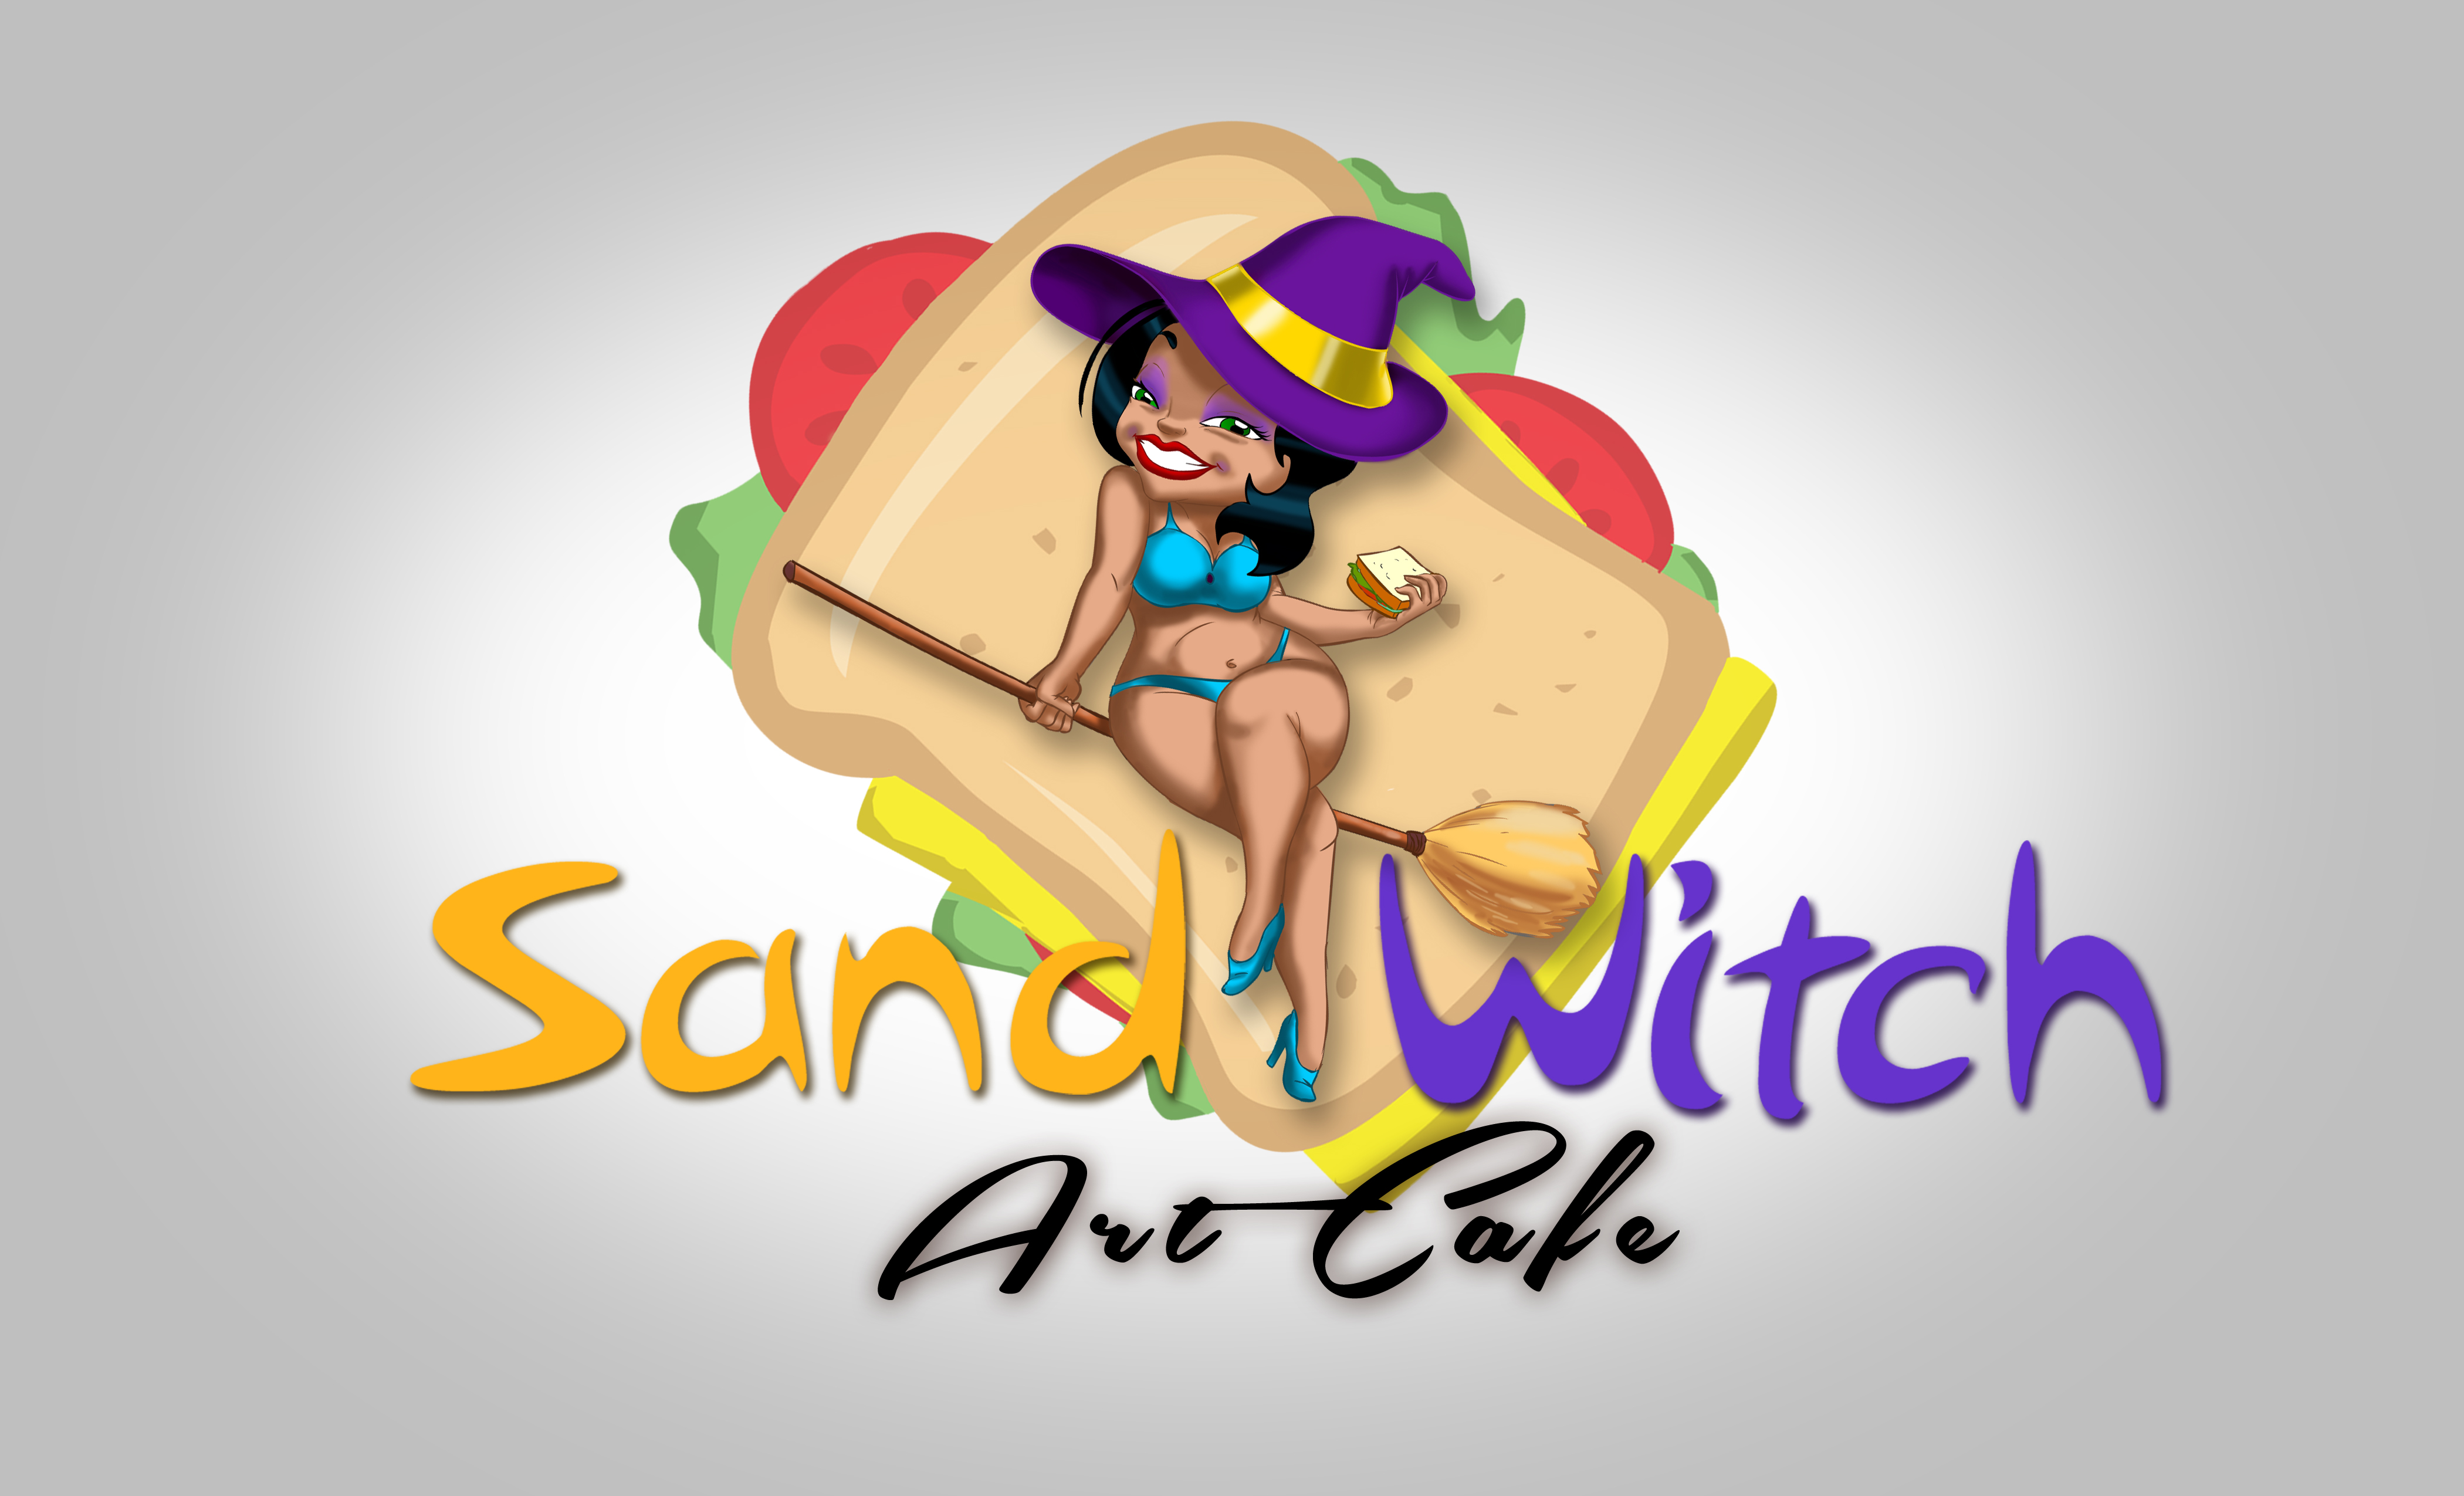 The Sand Witch Art Cafe - Wikimapia.